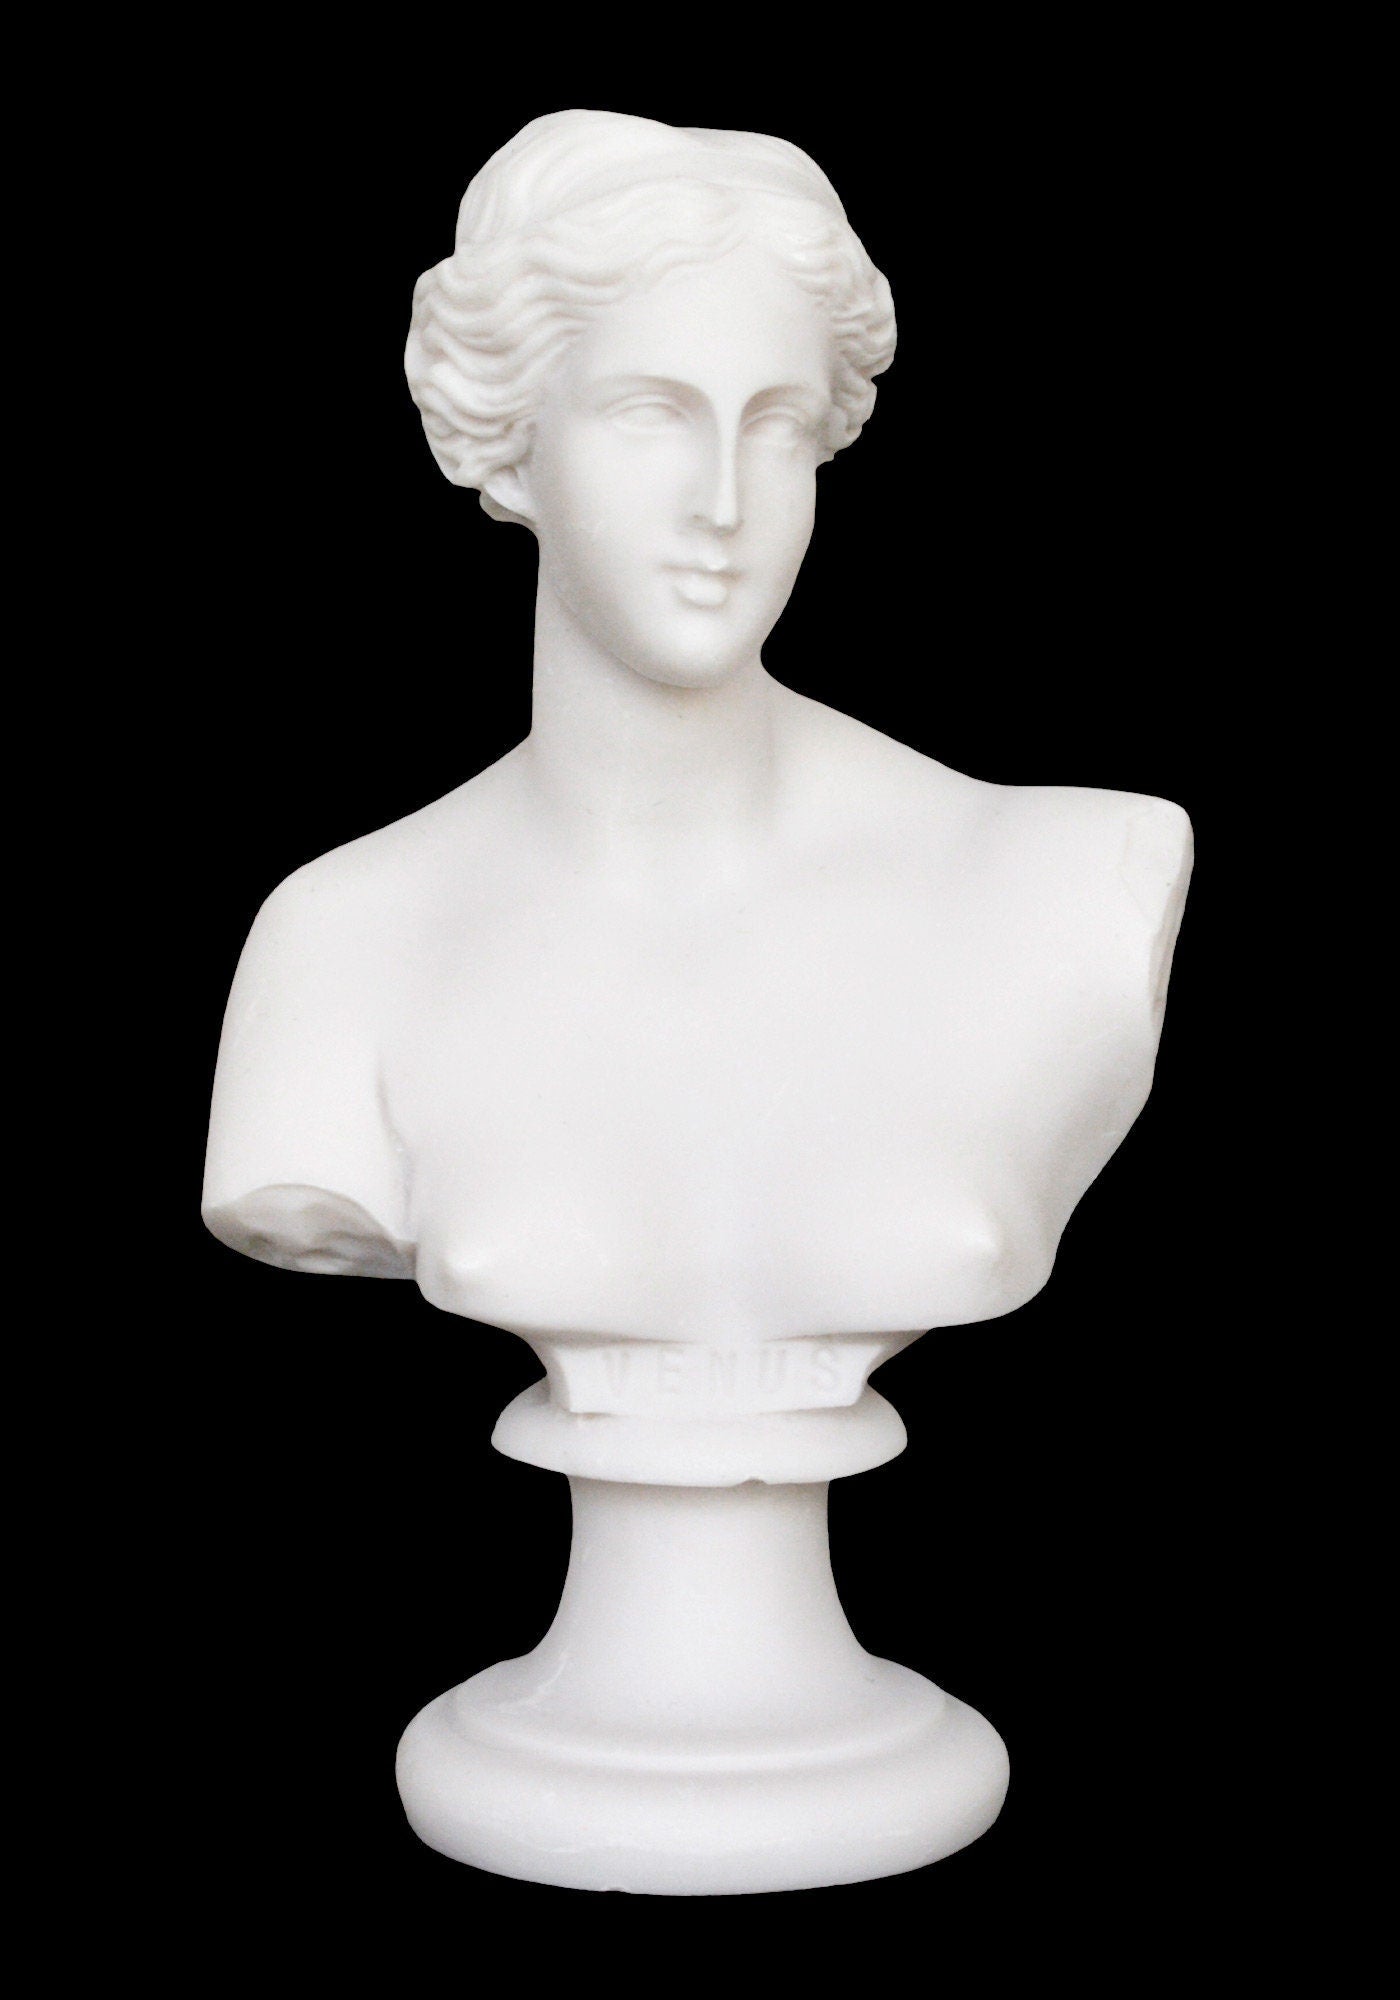 Aphrodite Venus Bust - Greek Roman Goddess of Love, Beauty, Sexual Pleasure, Fertility - Alabaster Statue